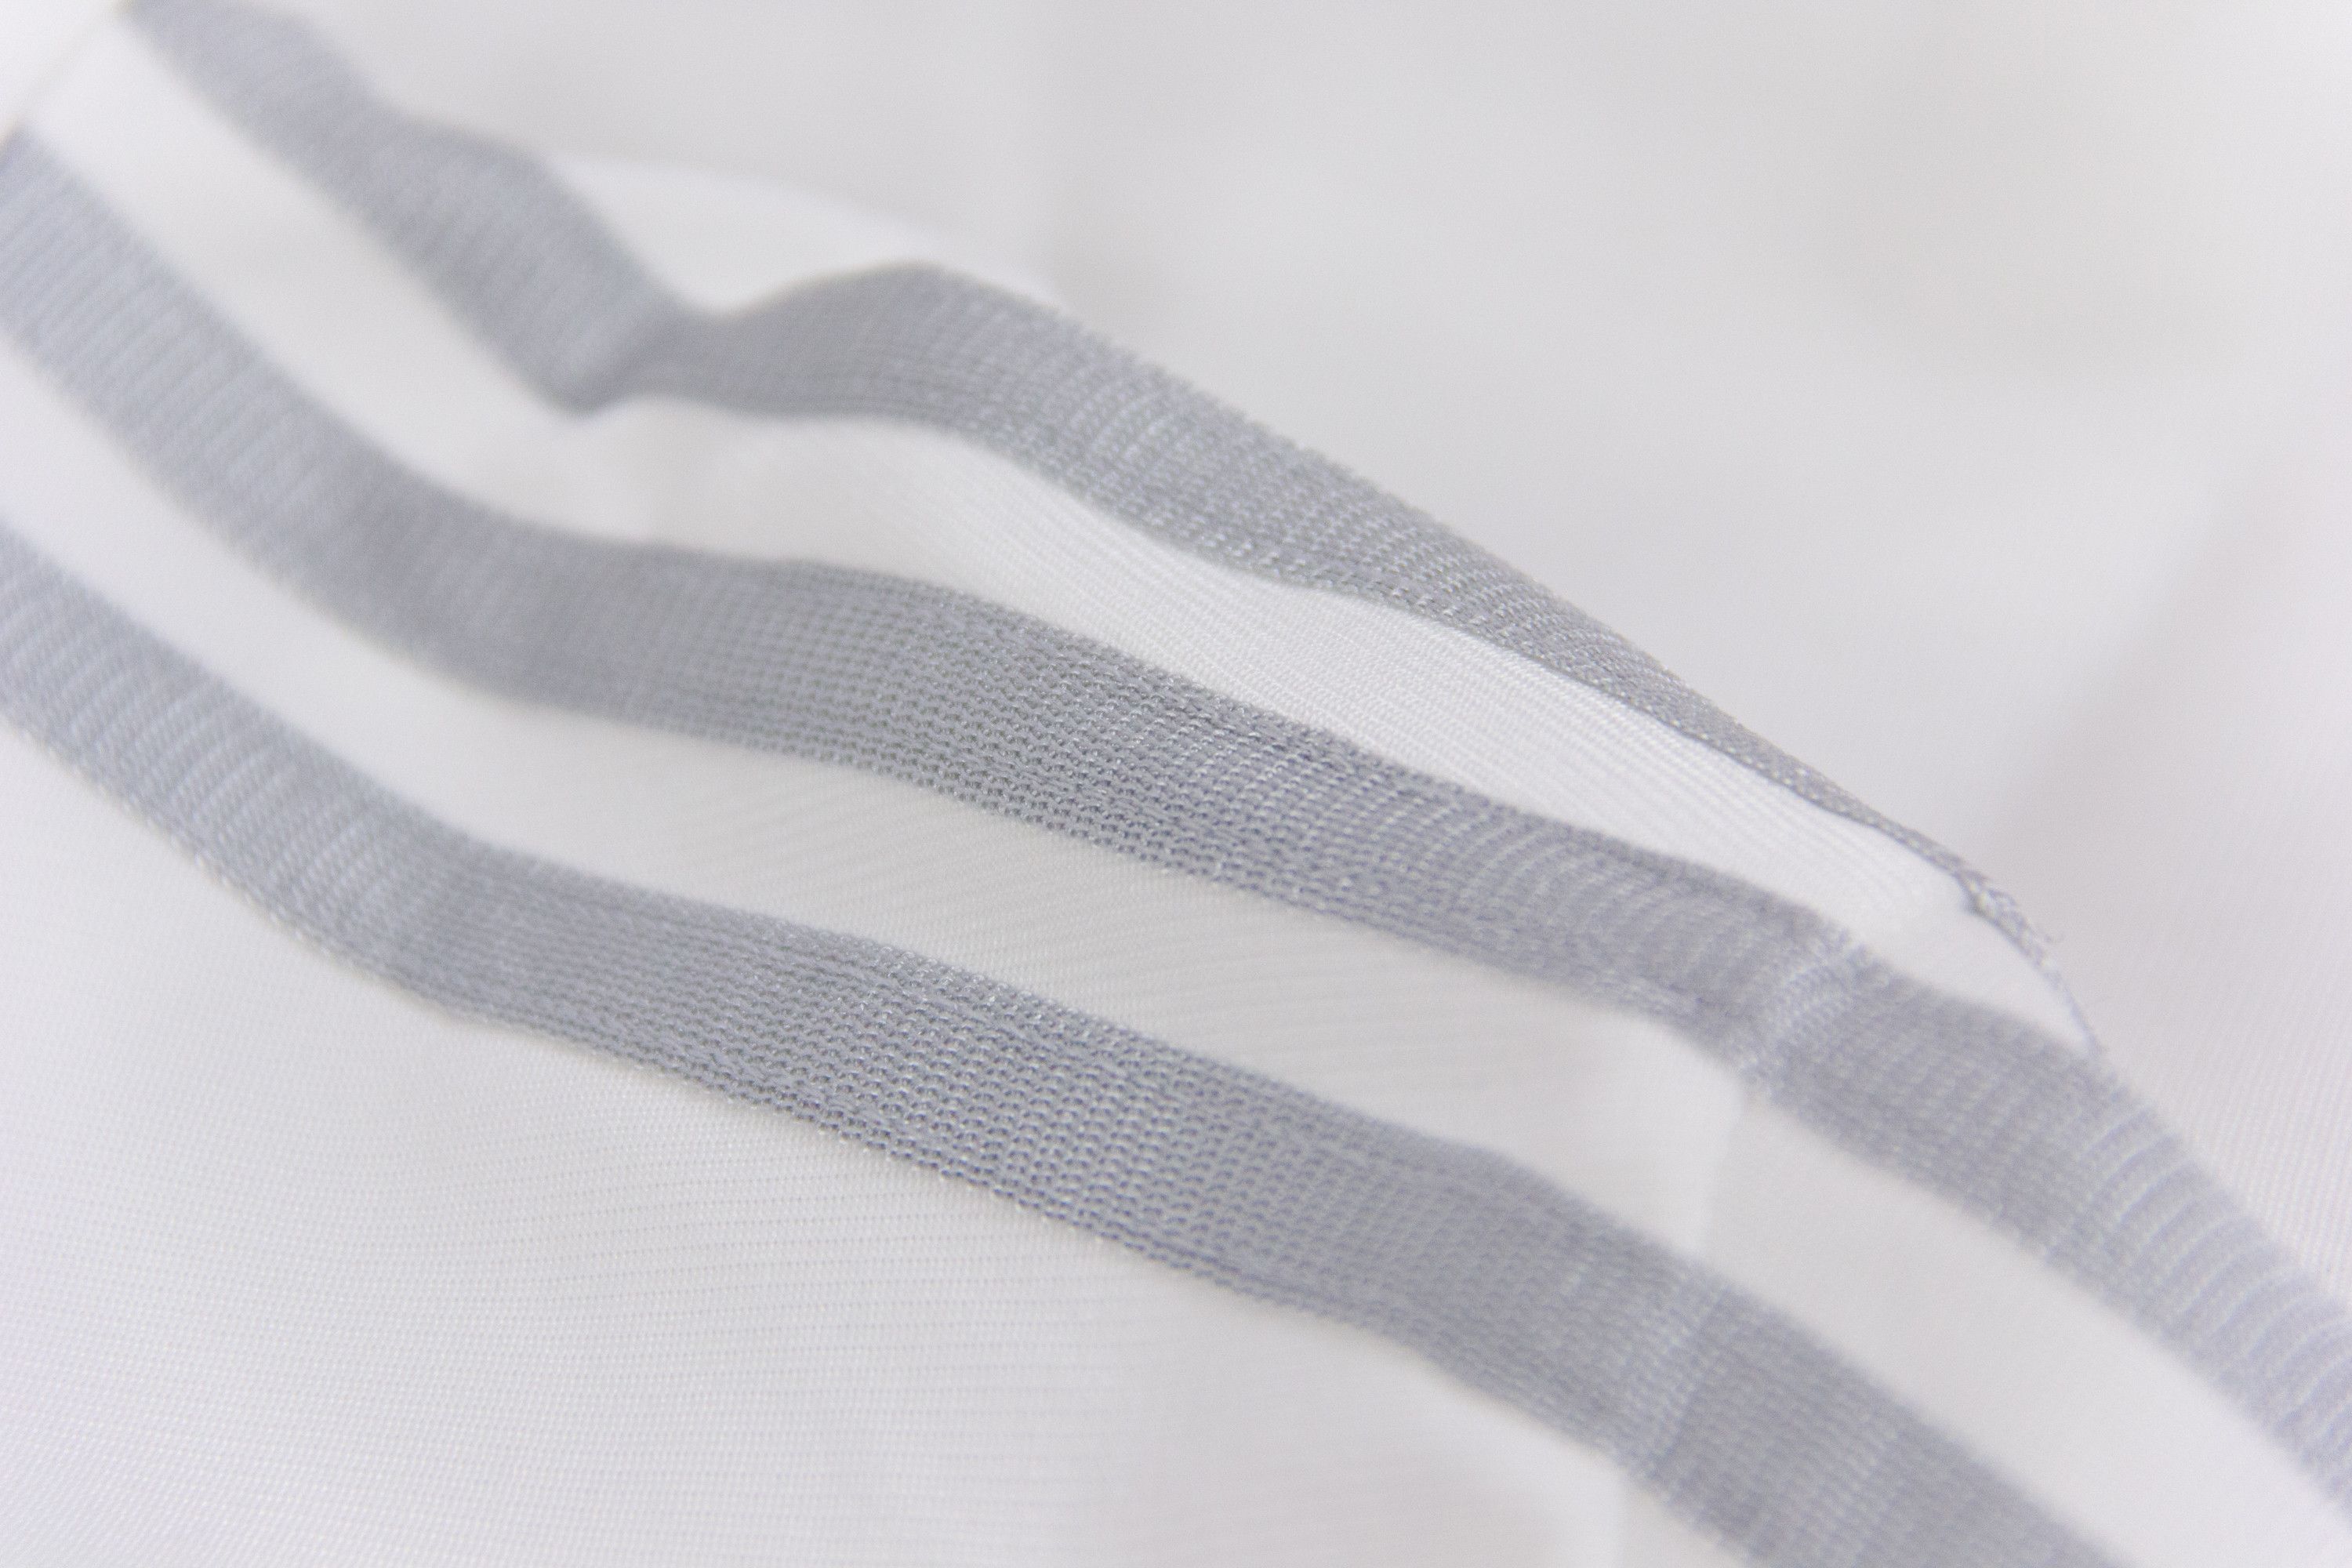 Adidas Adidas Originals White Track Jacket with Silver Stripes, Size M Size US M / EU 48-50 / 2 - 8 Thumbnail